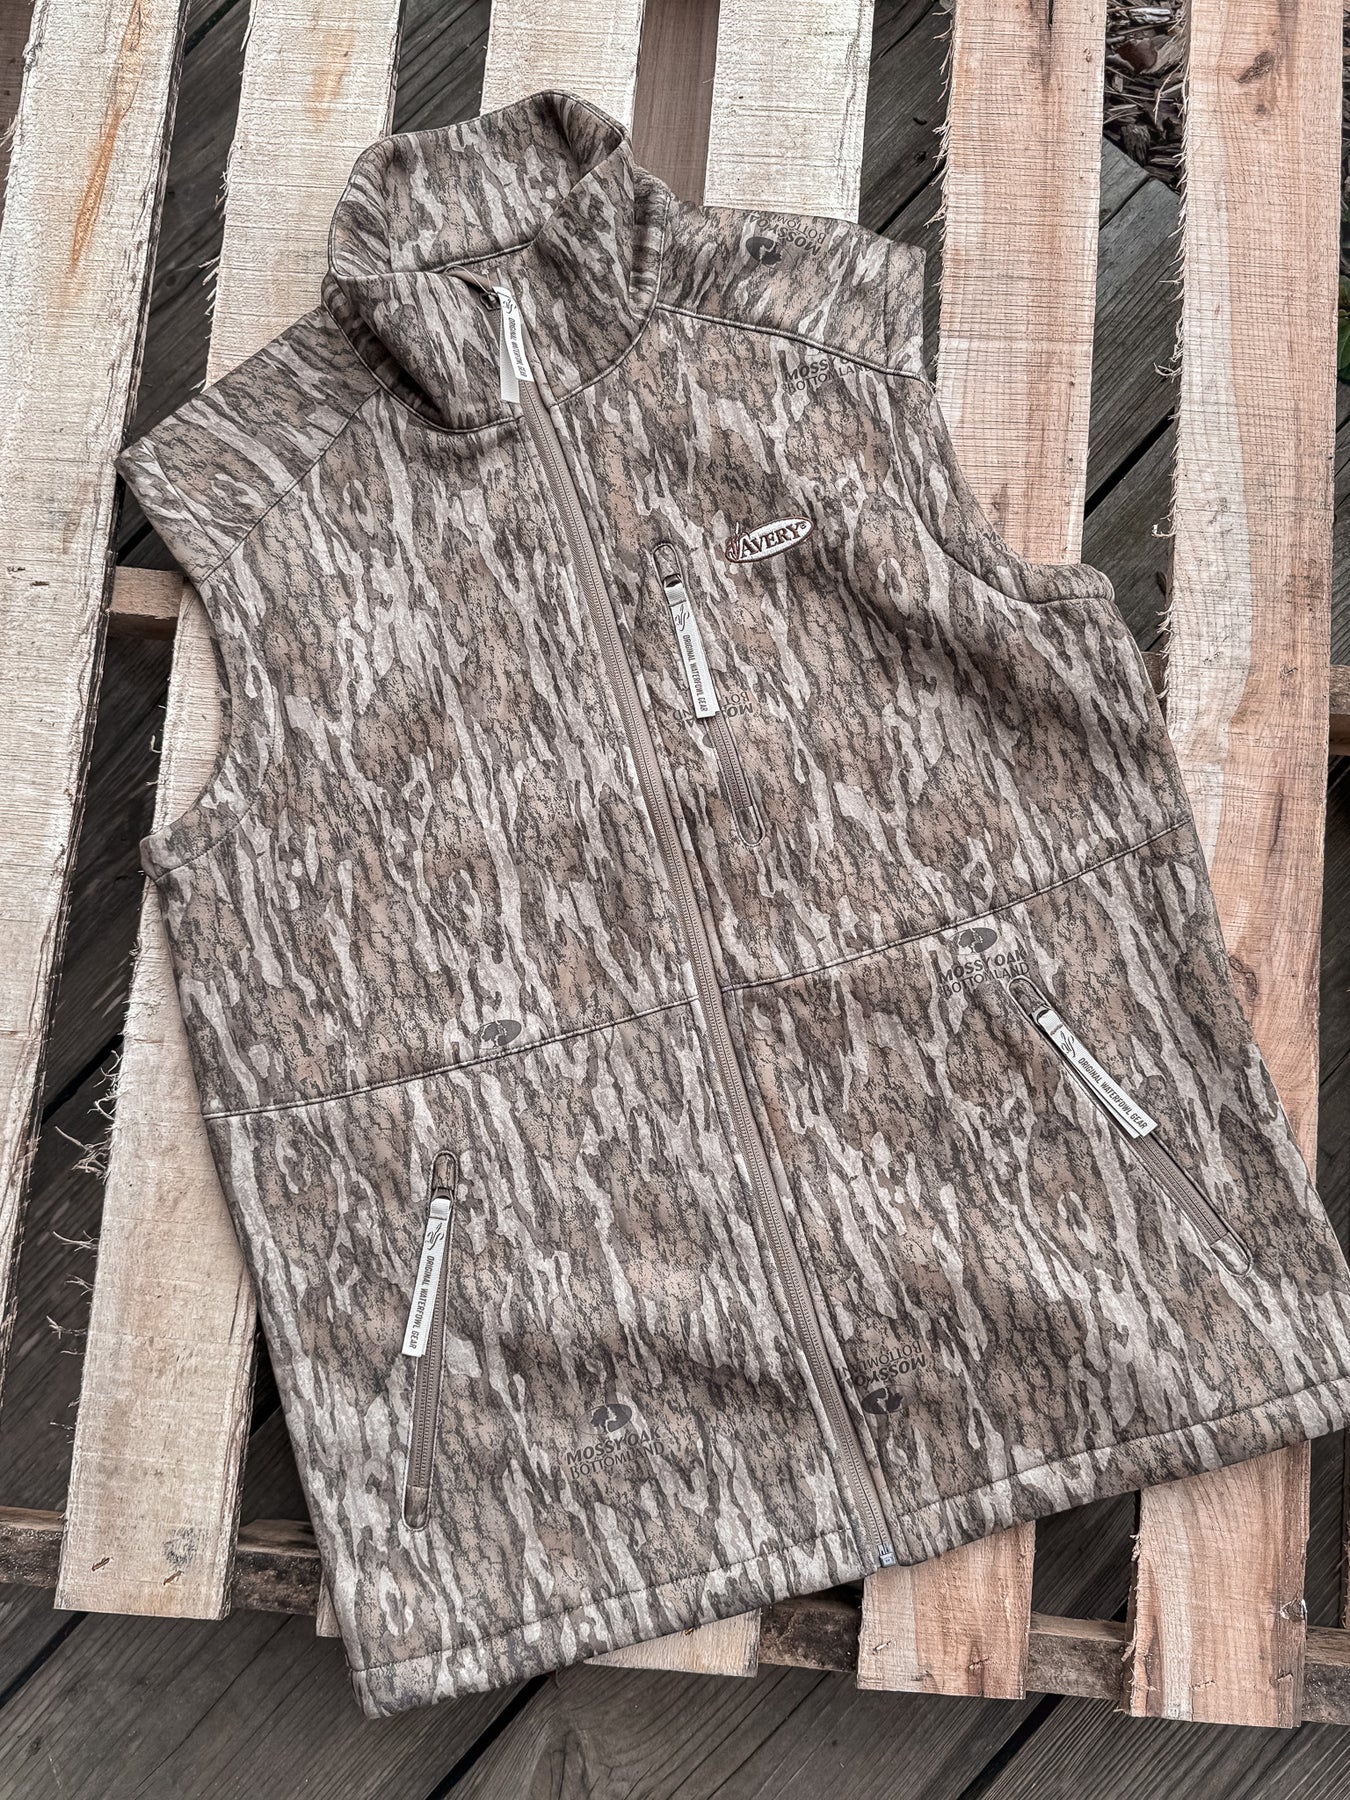 Eddie Bauer® Fleece Vest - Women's** (Restrictions Apply - see